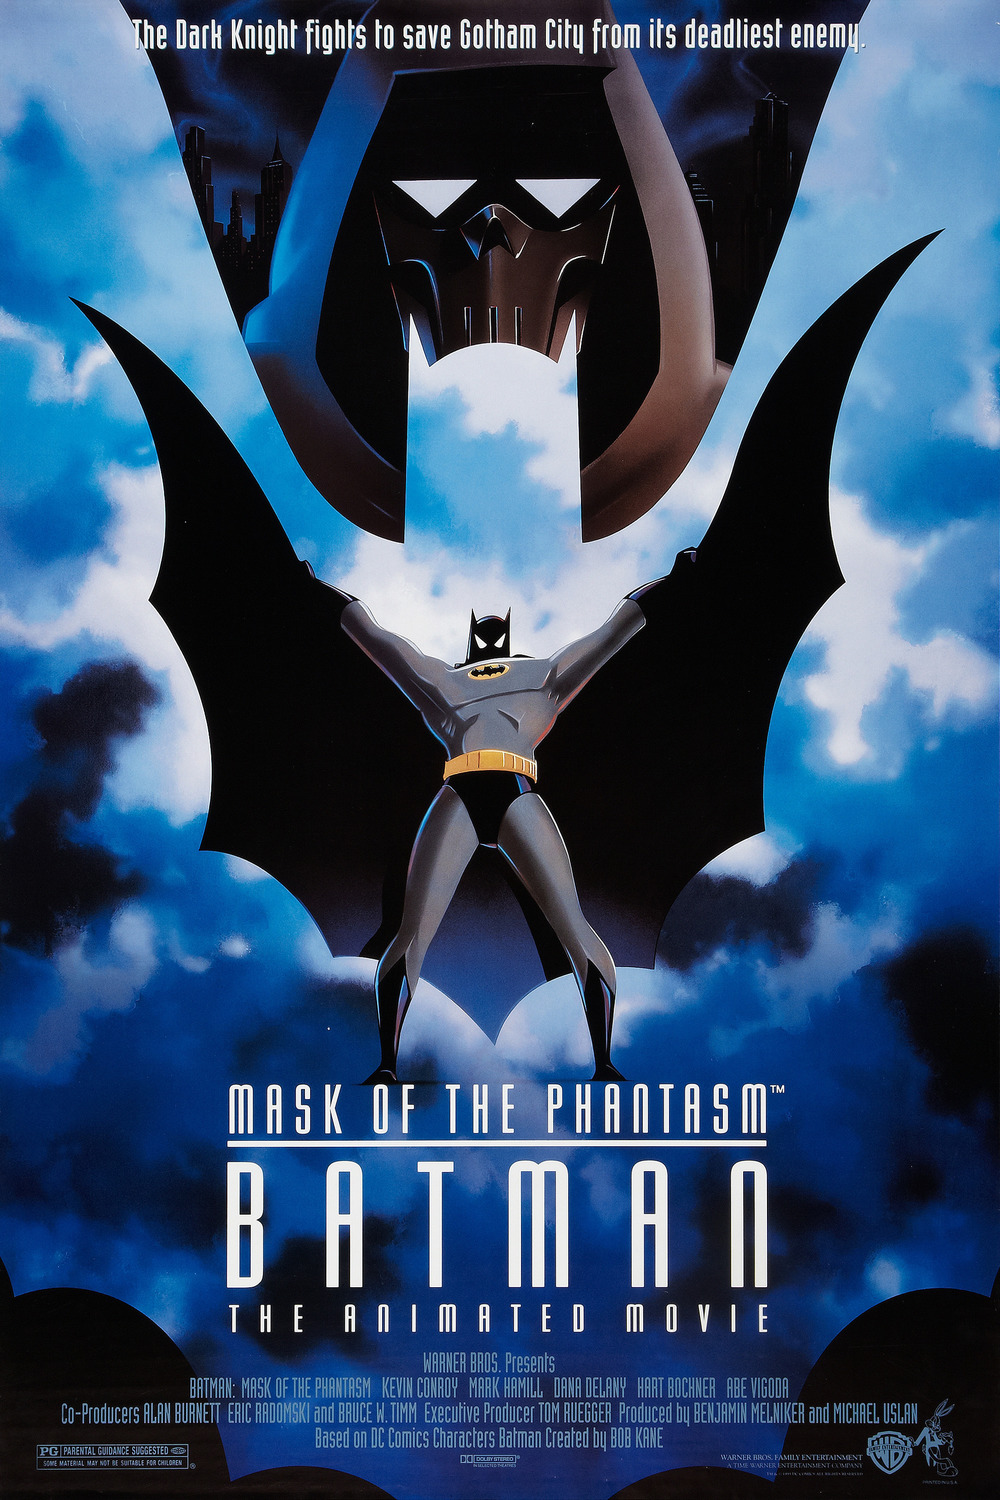 Extra Large Movie Poster Image for Batman: Mask of the Phantasm 